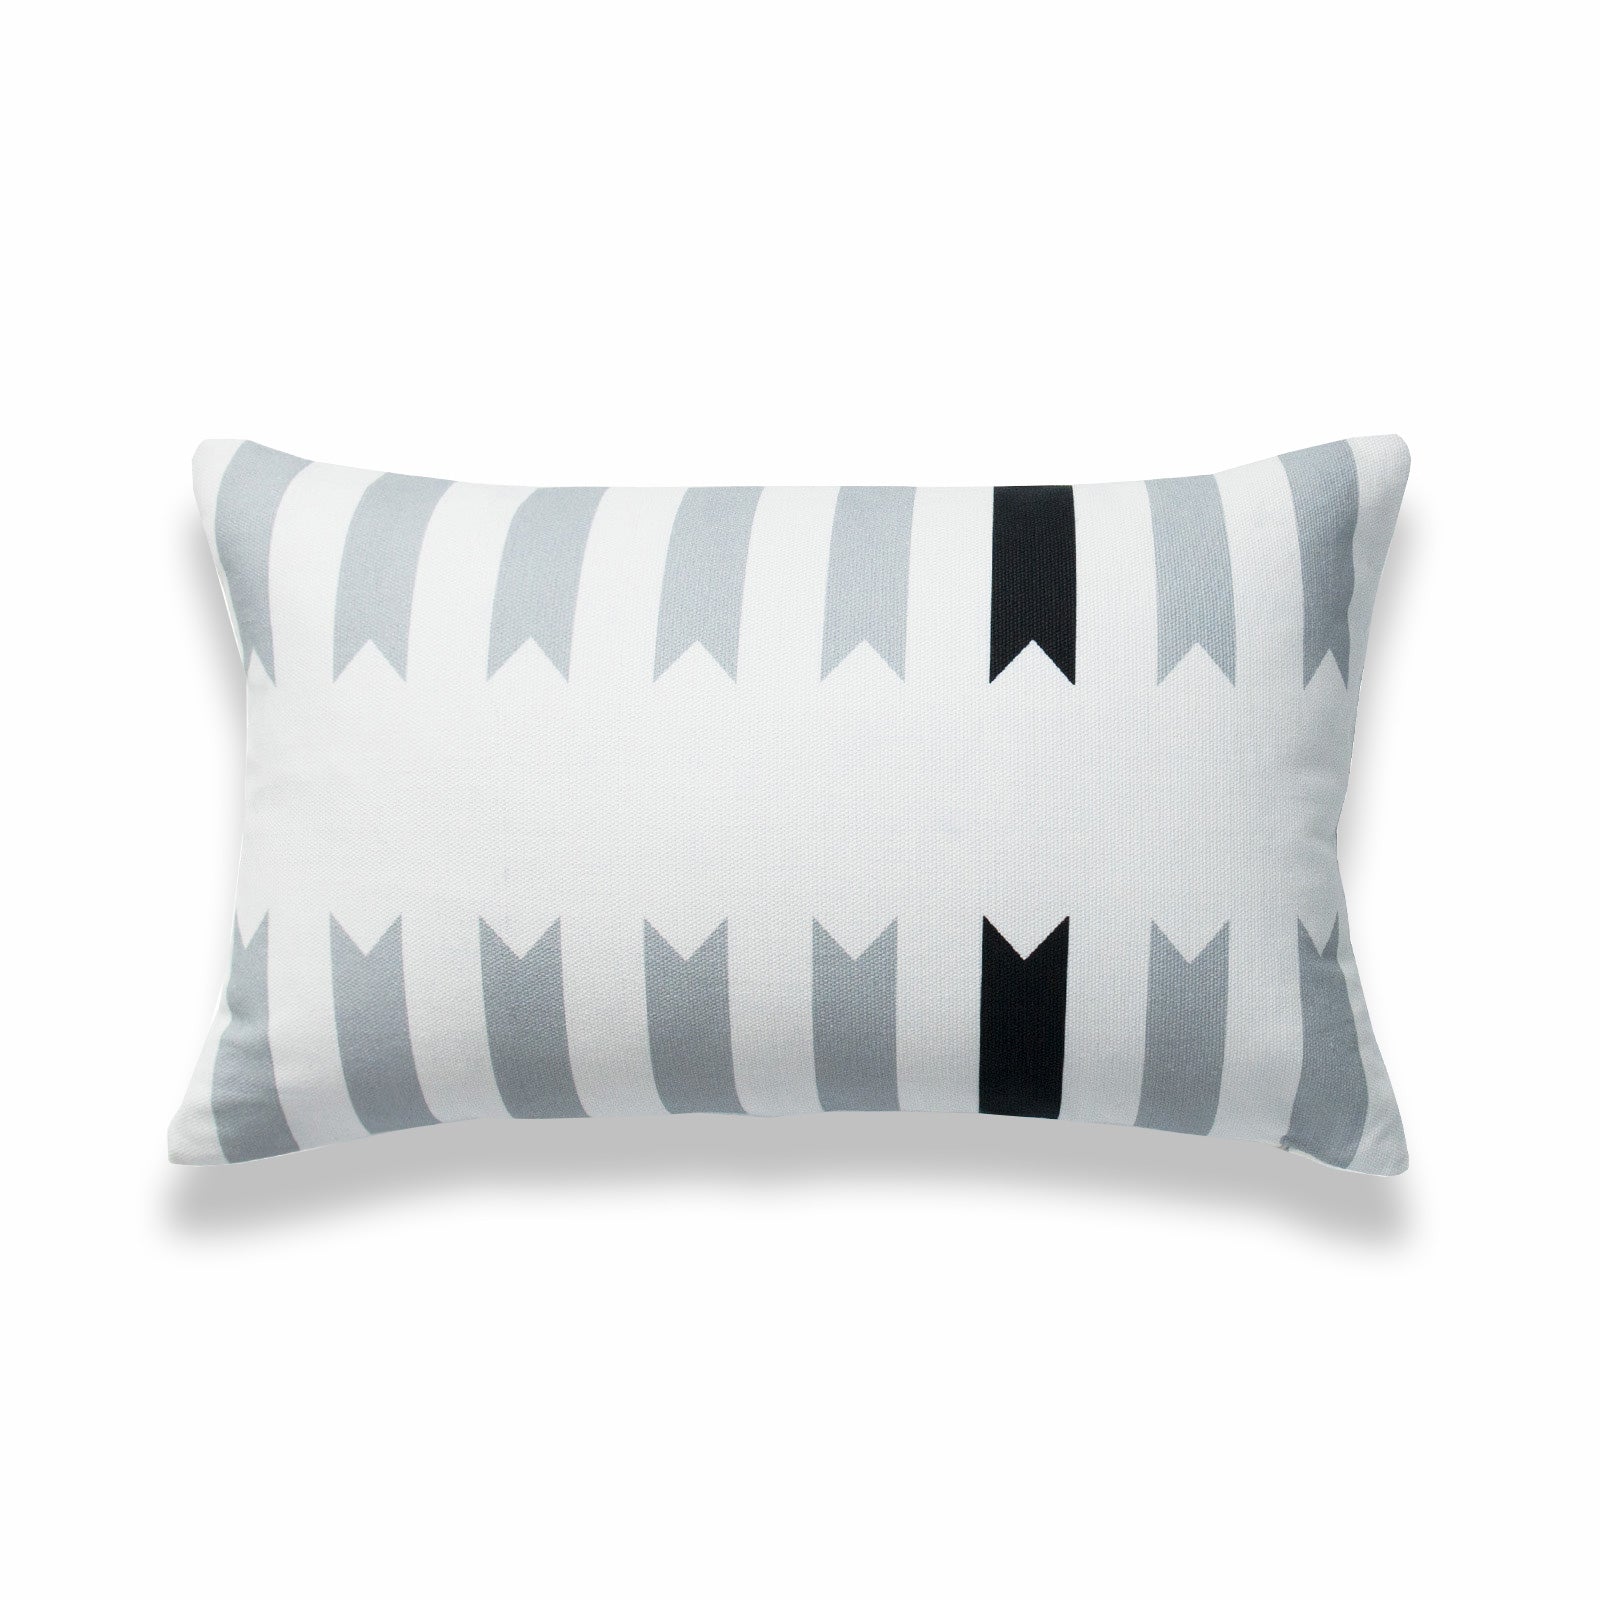 Aztec Print Lumbar Pillow Cover, Geometric, Black White Gray, 12"x20"